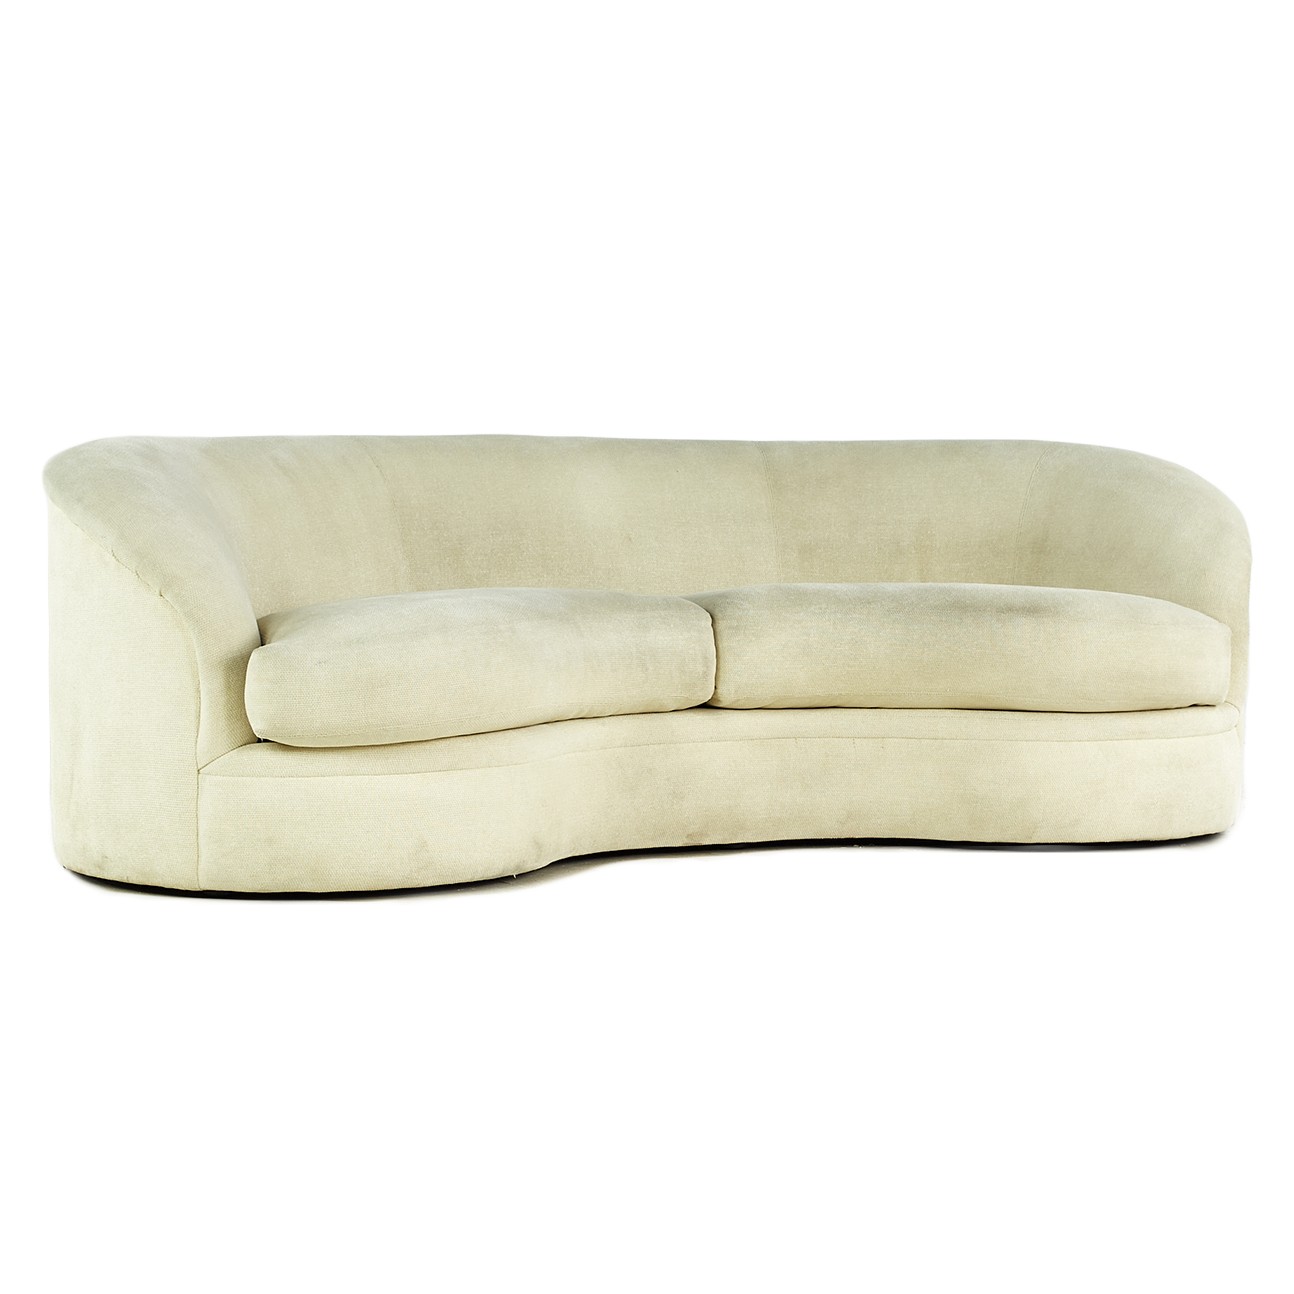 Vladimir Kagan Style Directional Furniture Mid Century Biomorphic Kidney Sofa